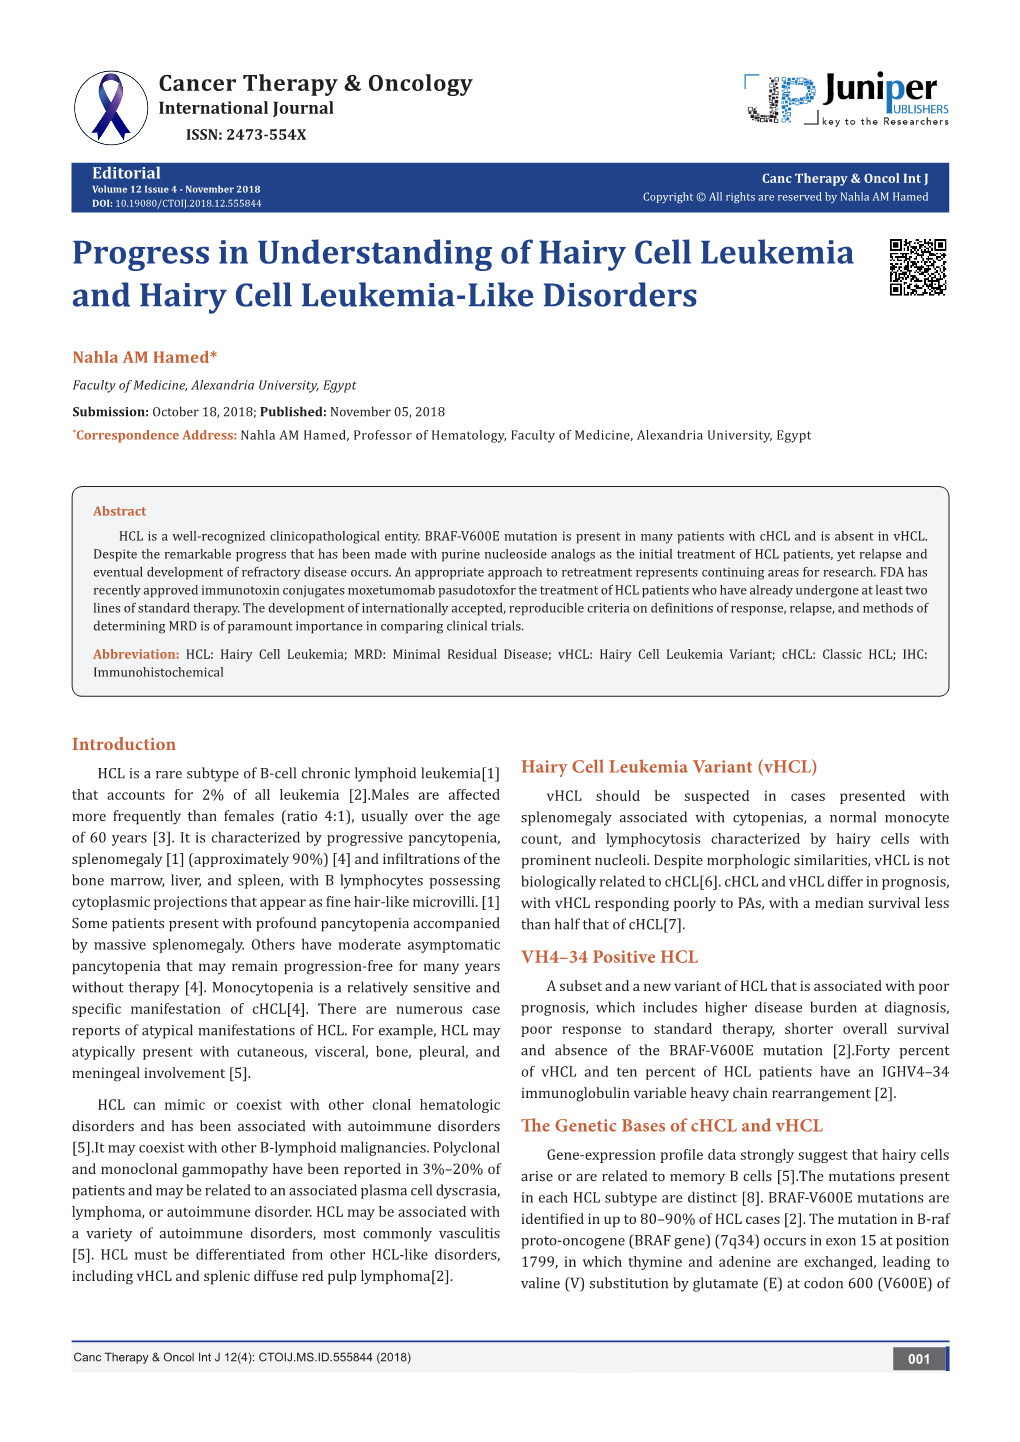 Progress in Understanding of Hairy Cell Leukemia and Hairy Cell Leukemia-Like Disorders